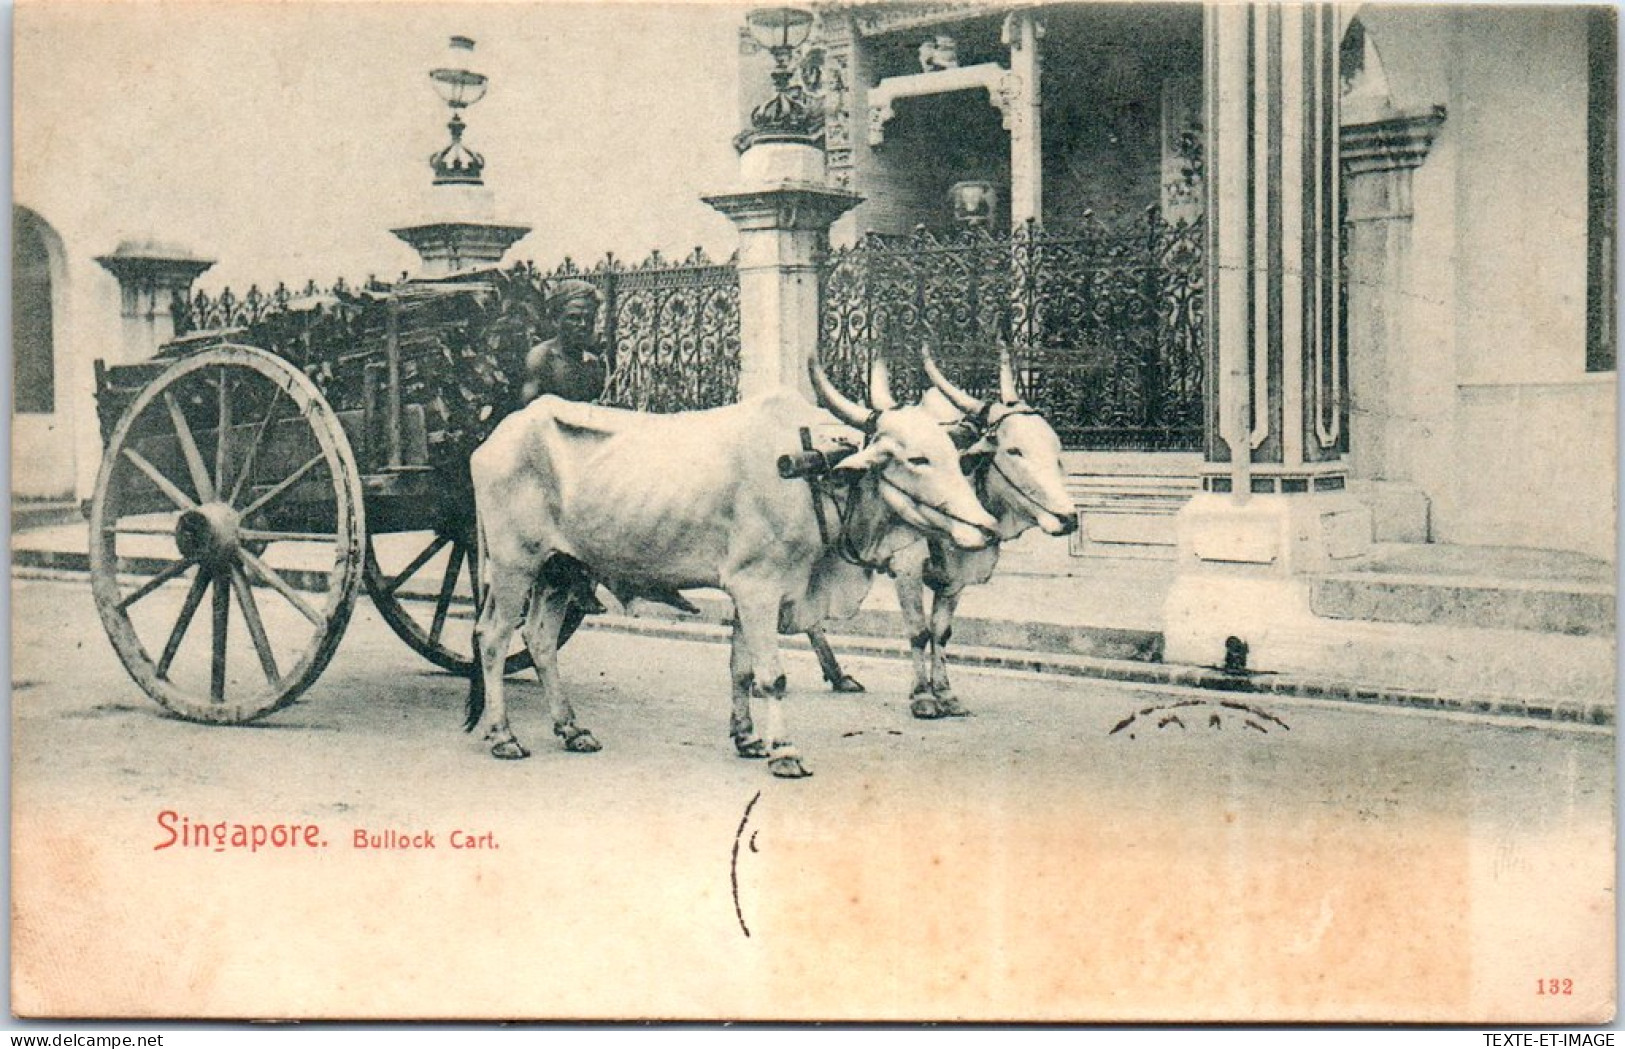 SINGAPORE - Bullock Cart. - Singapore